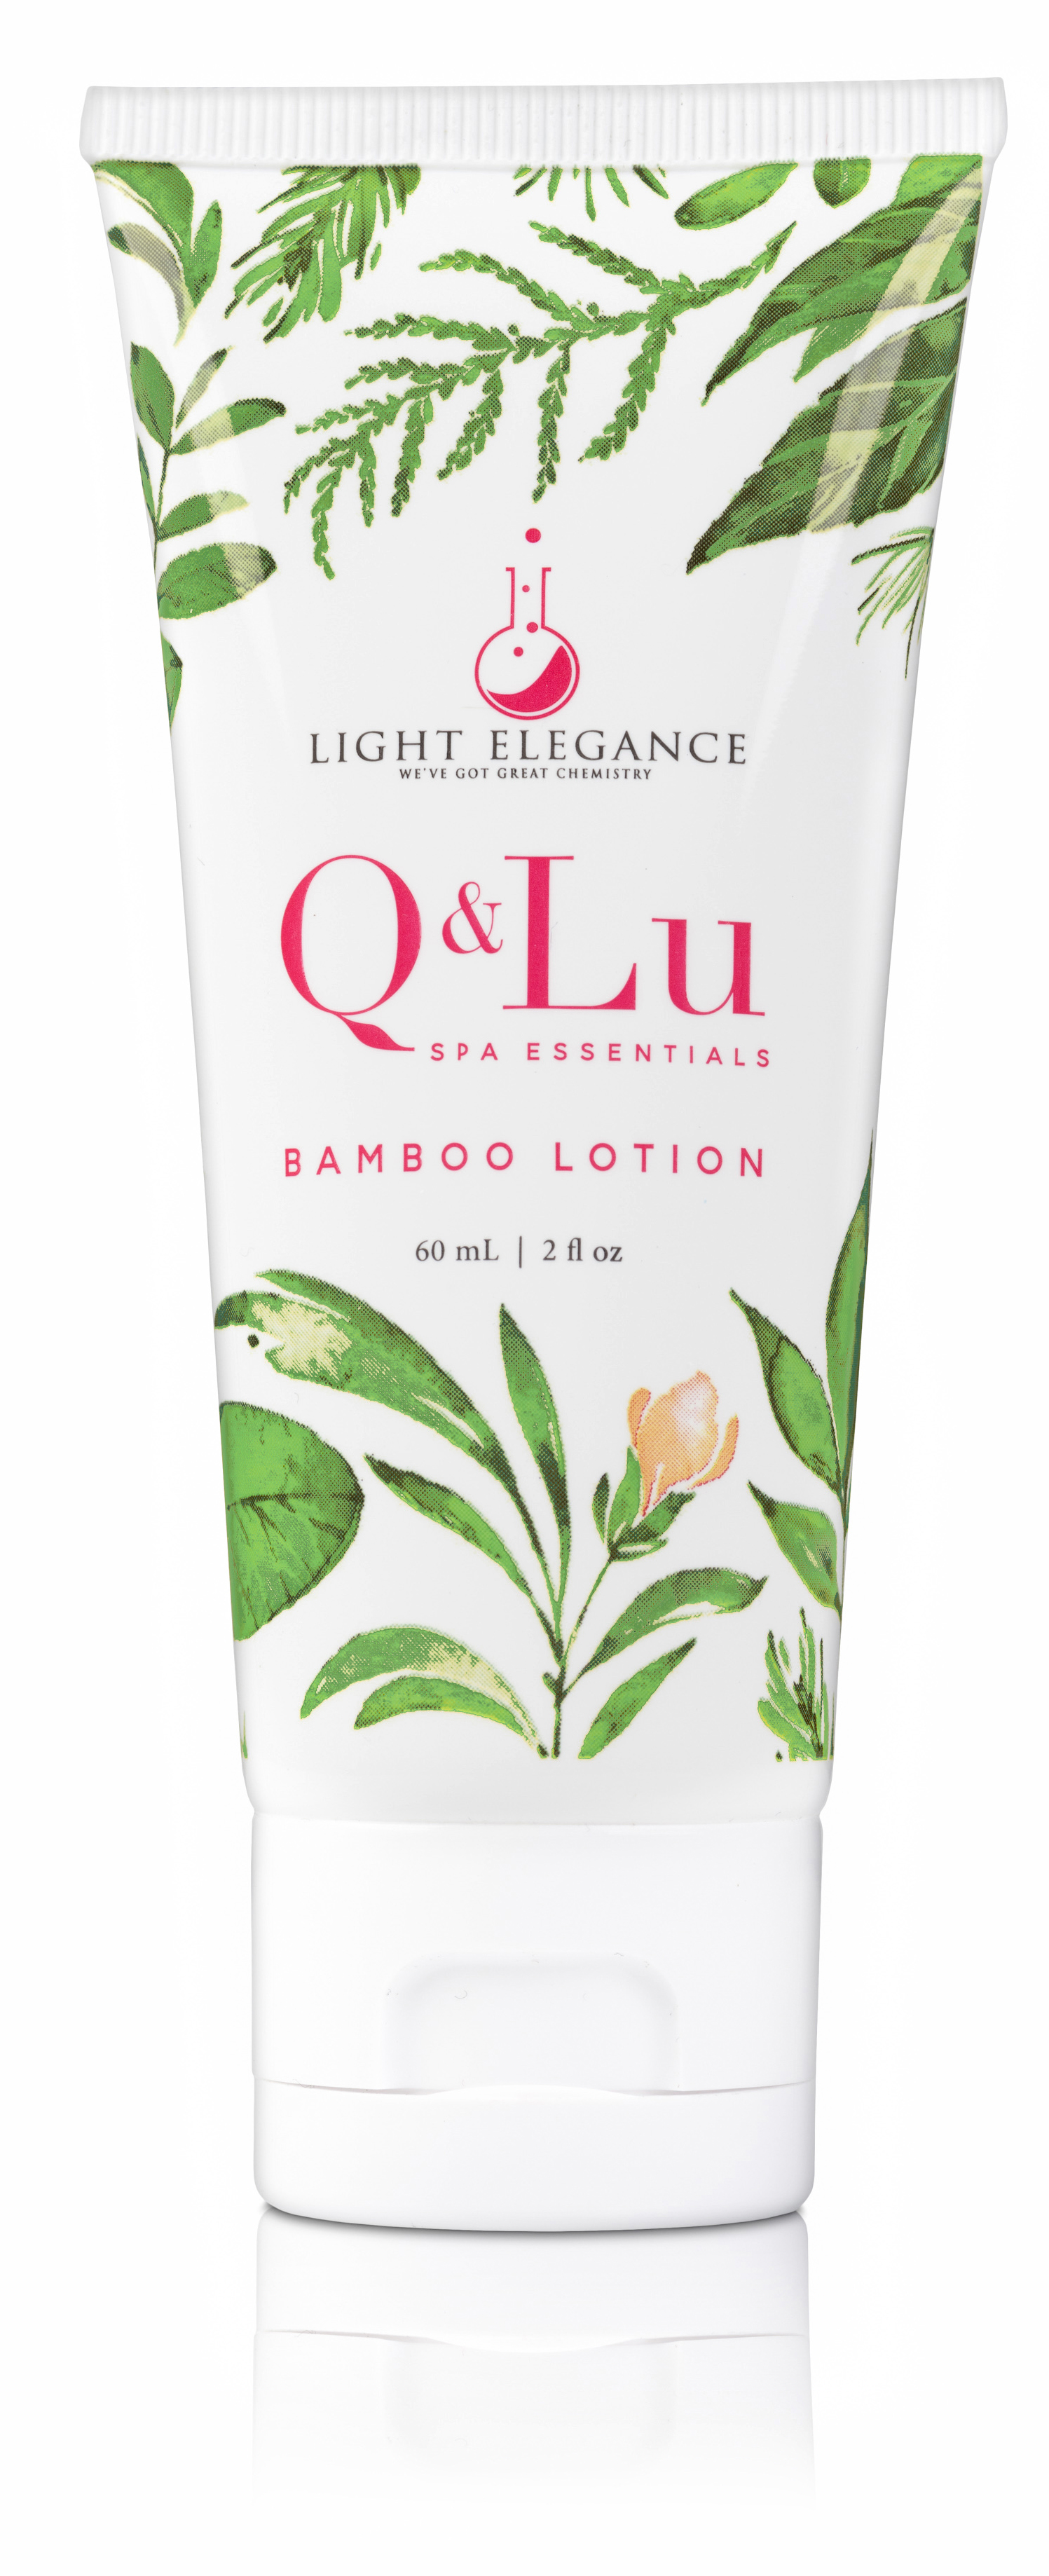 Q&Lu Bamboo Lotion